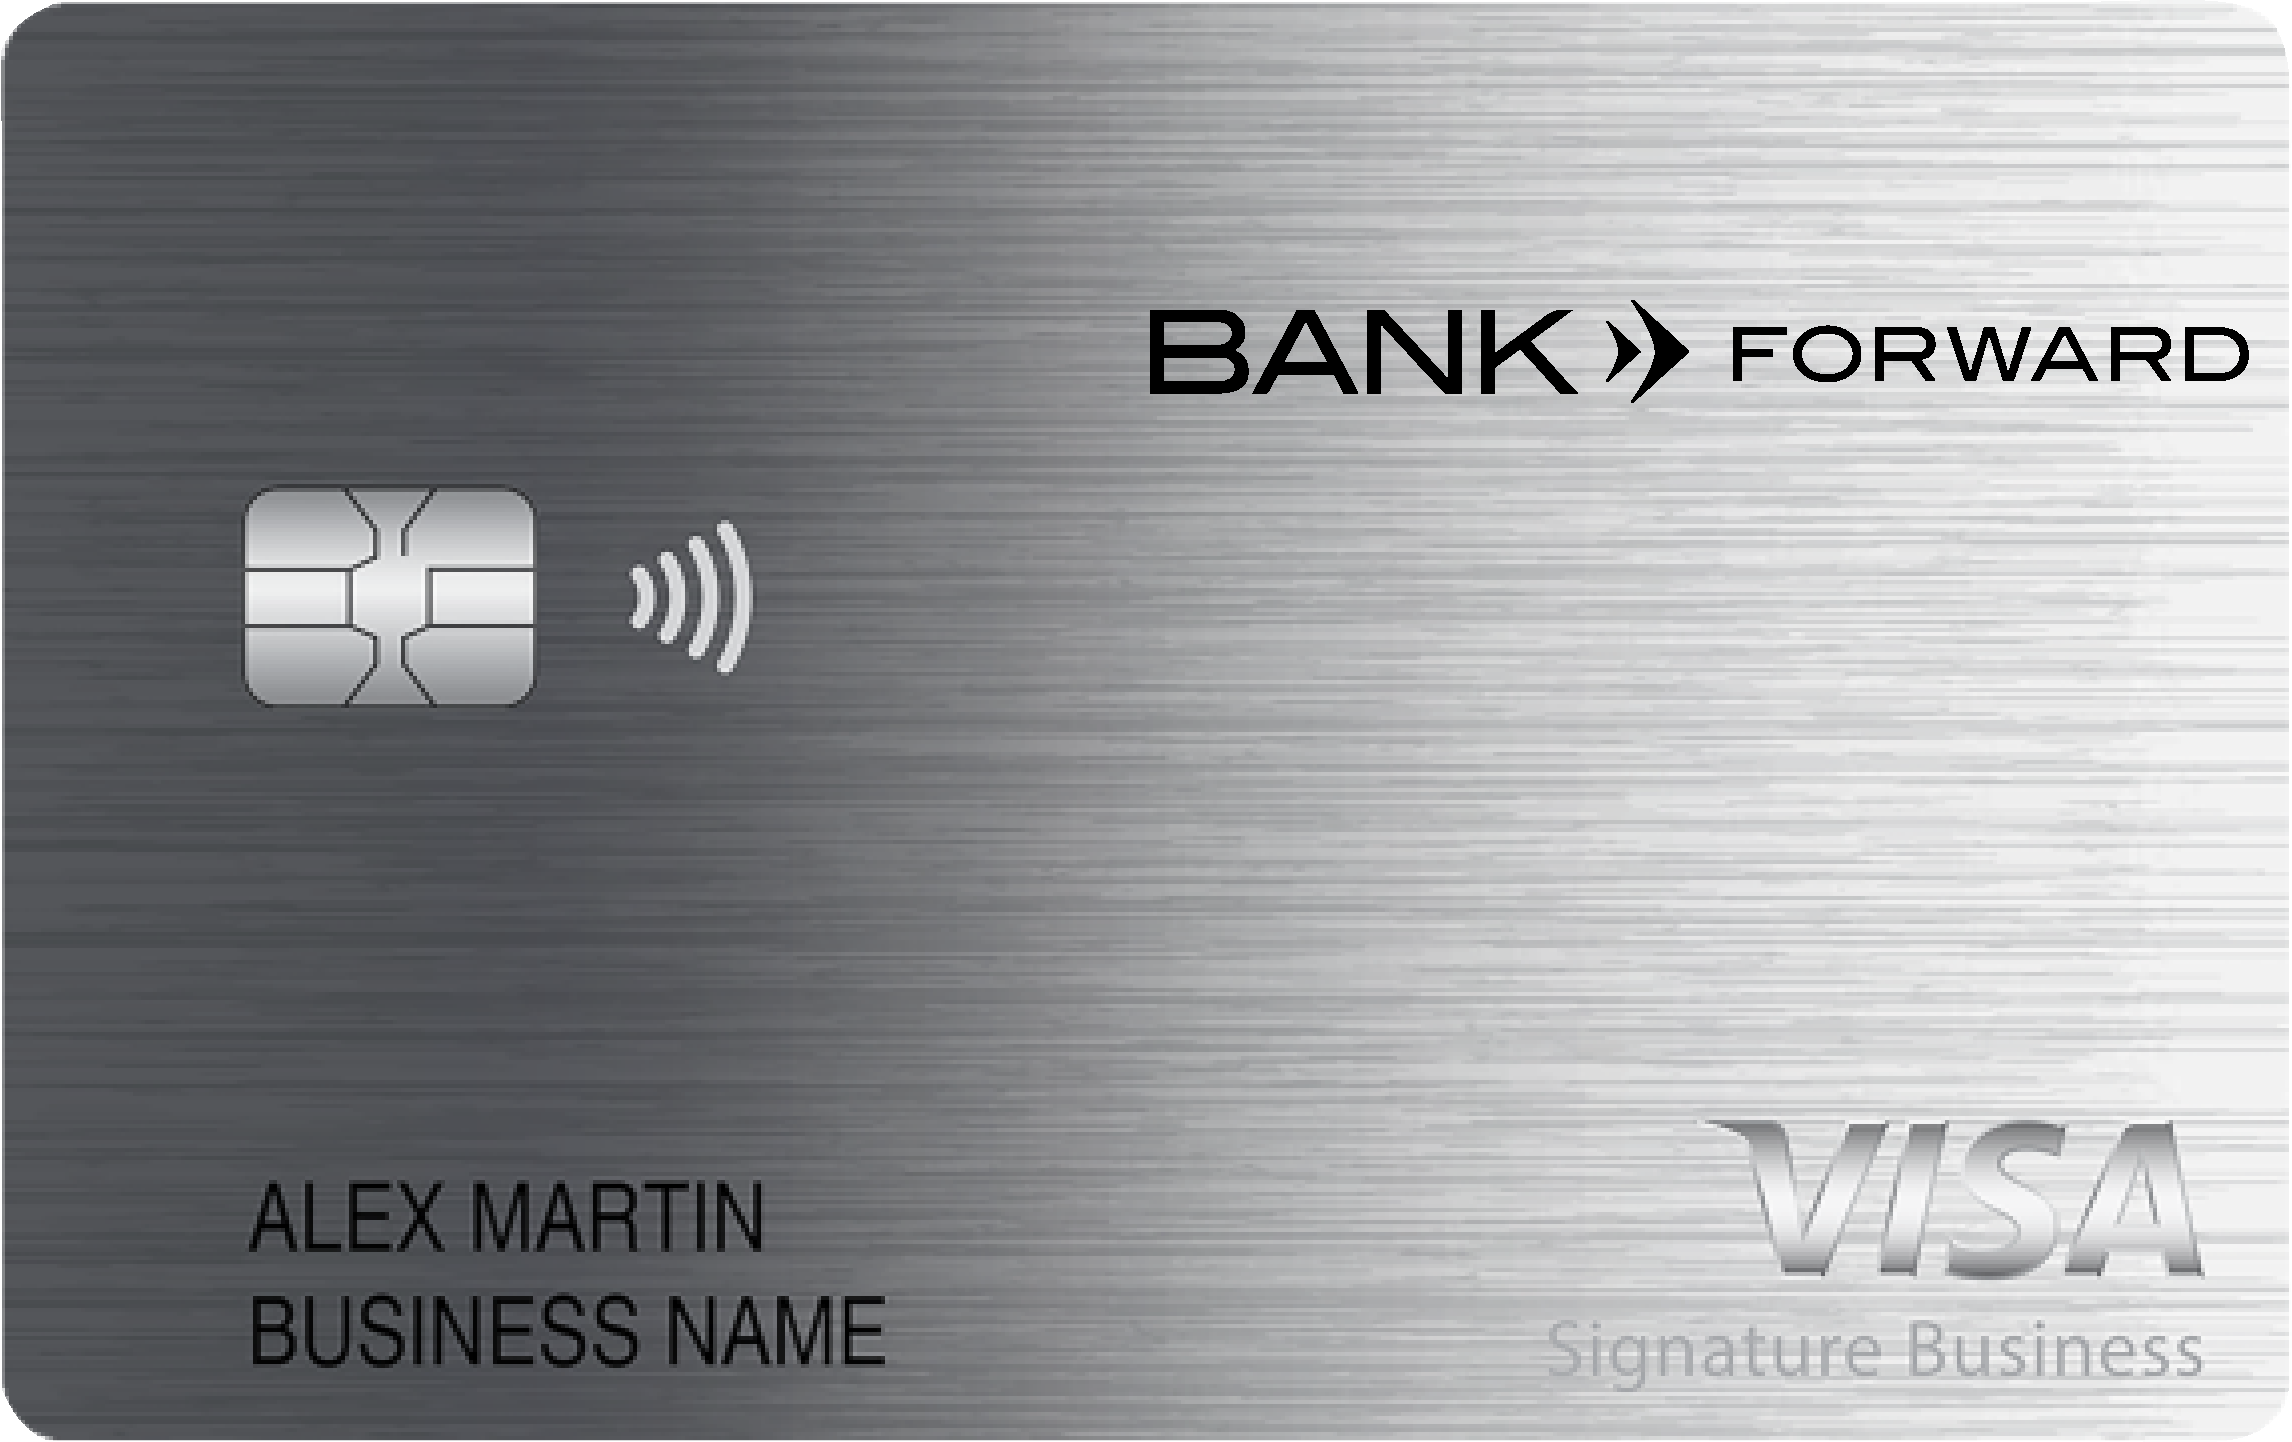 BANK FORWARD Smart Business Rewards Card